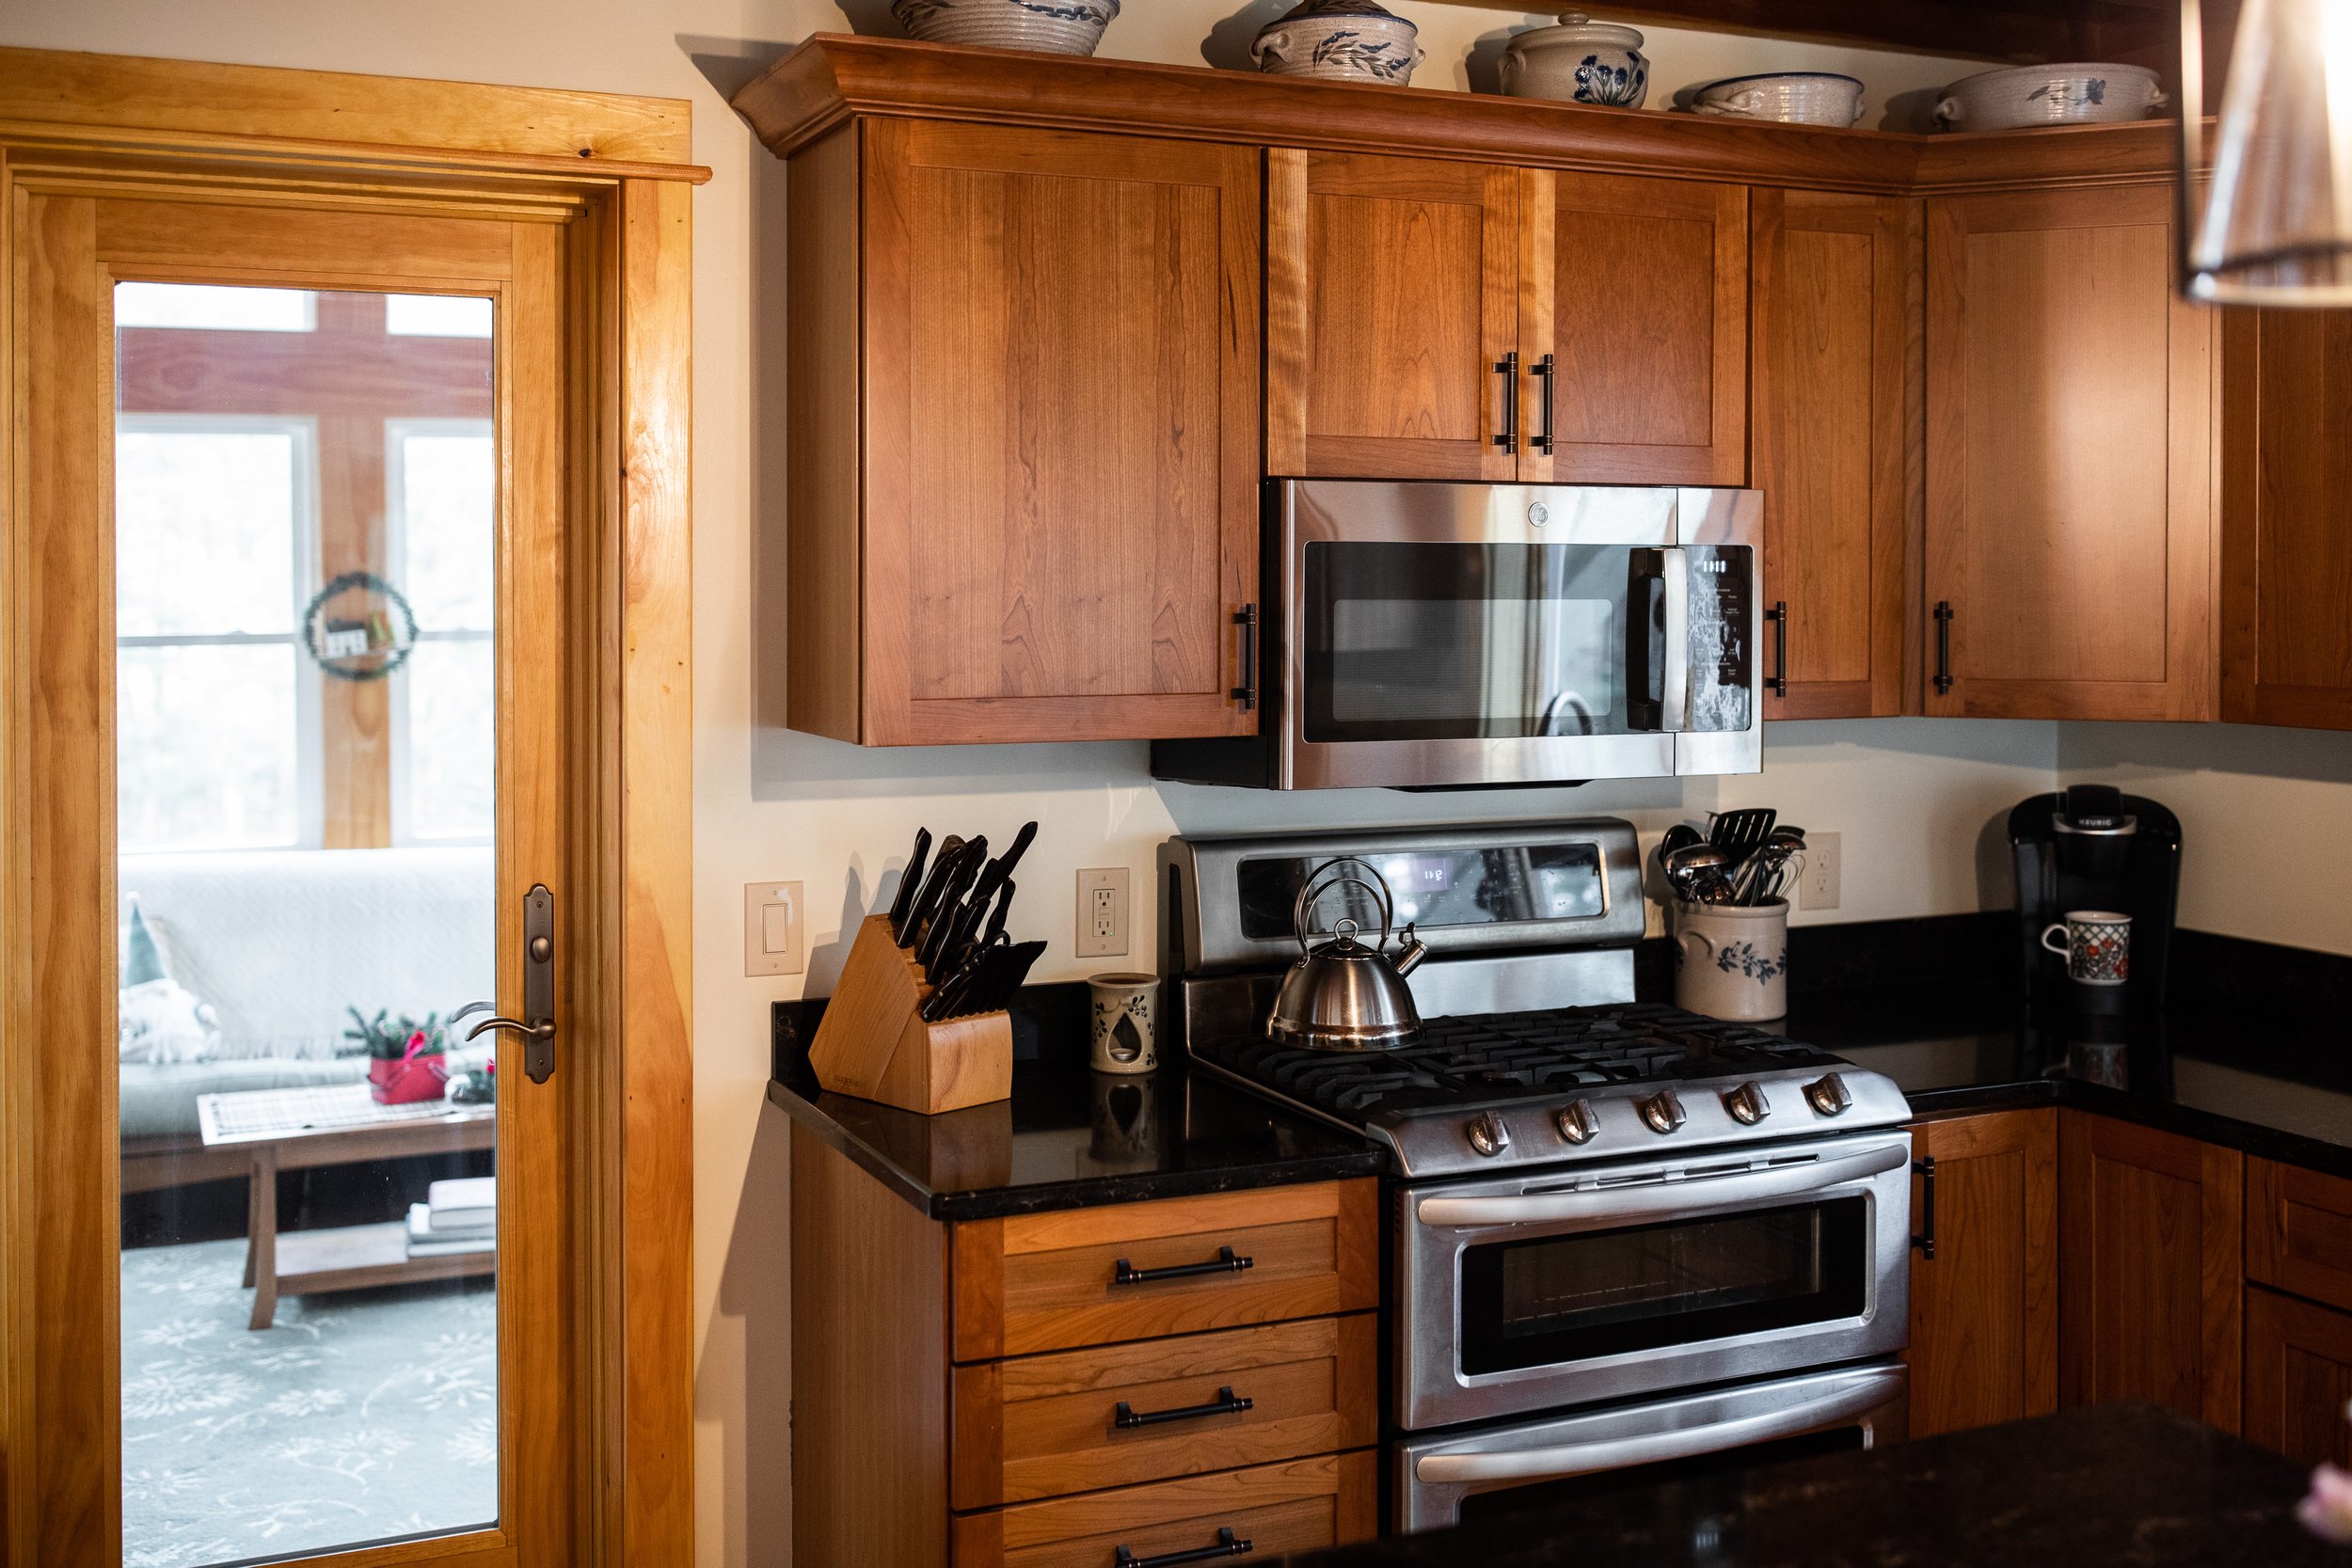 Credible Construction - Barrington New Hampshire Kitchen Renovation-93.jpg